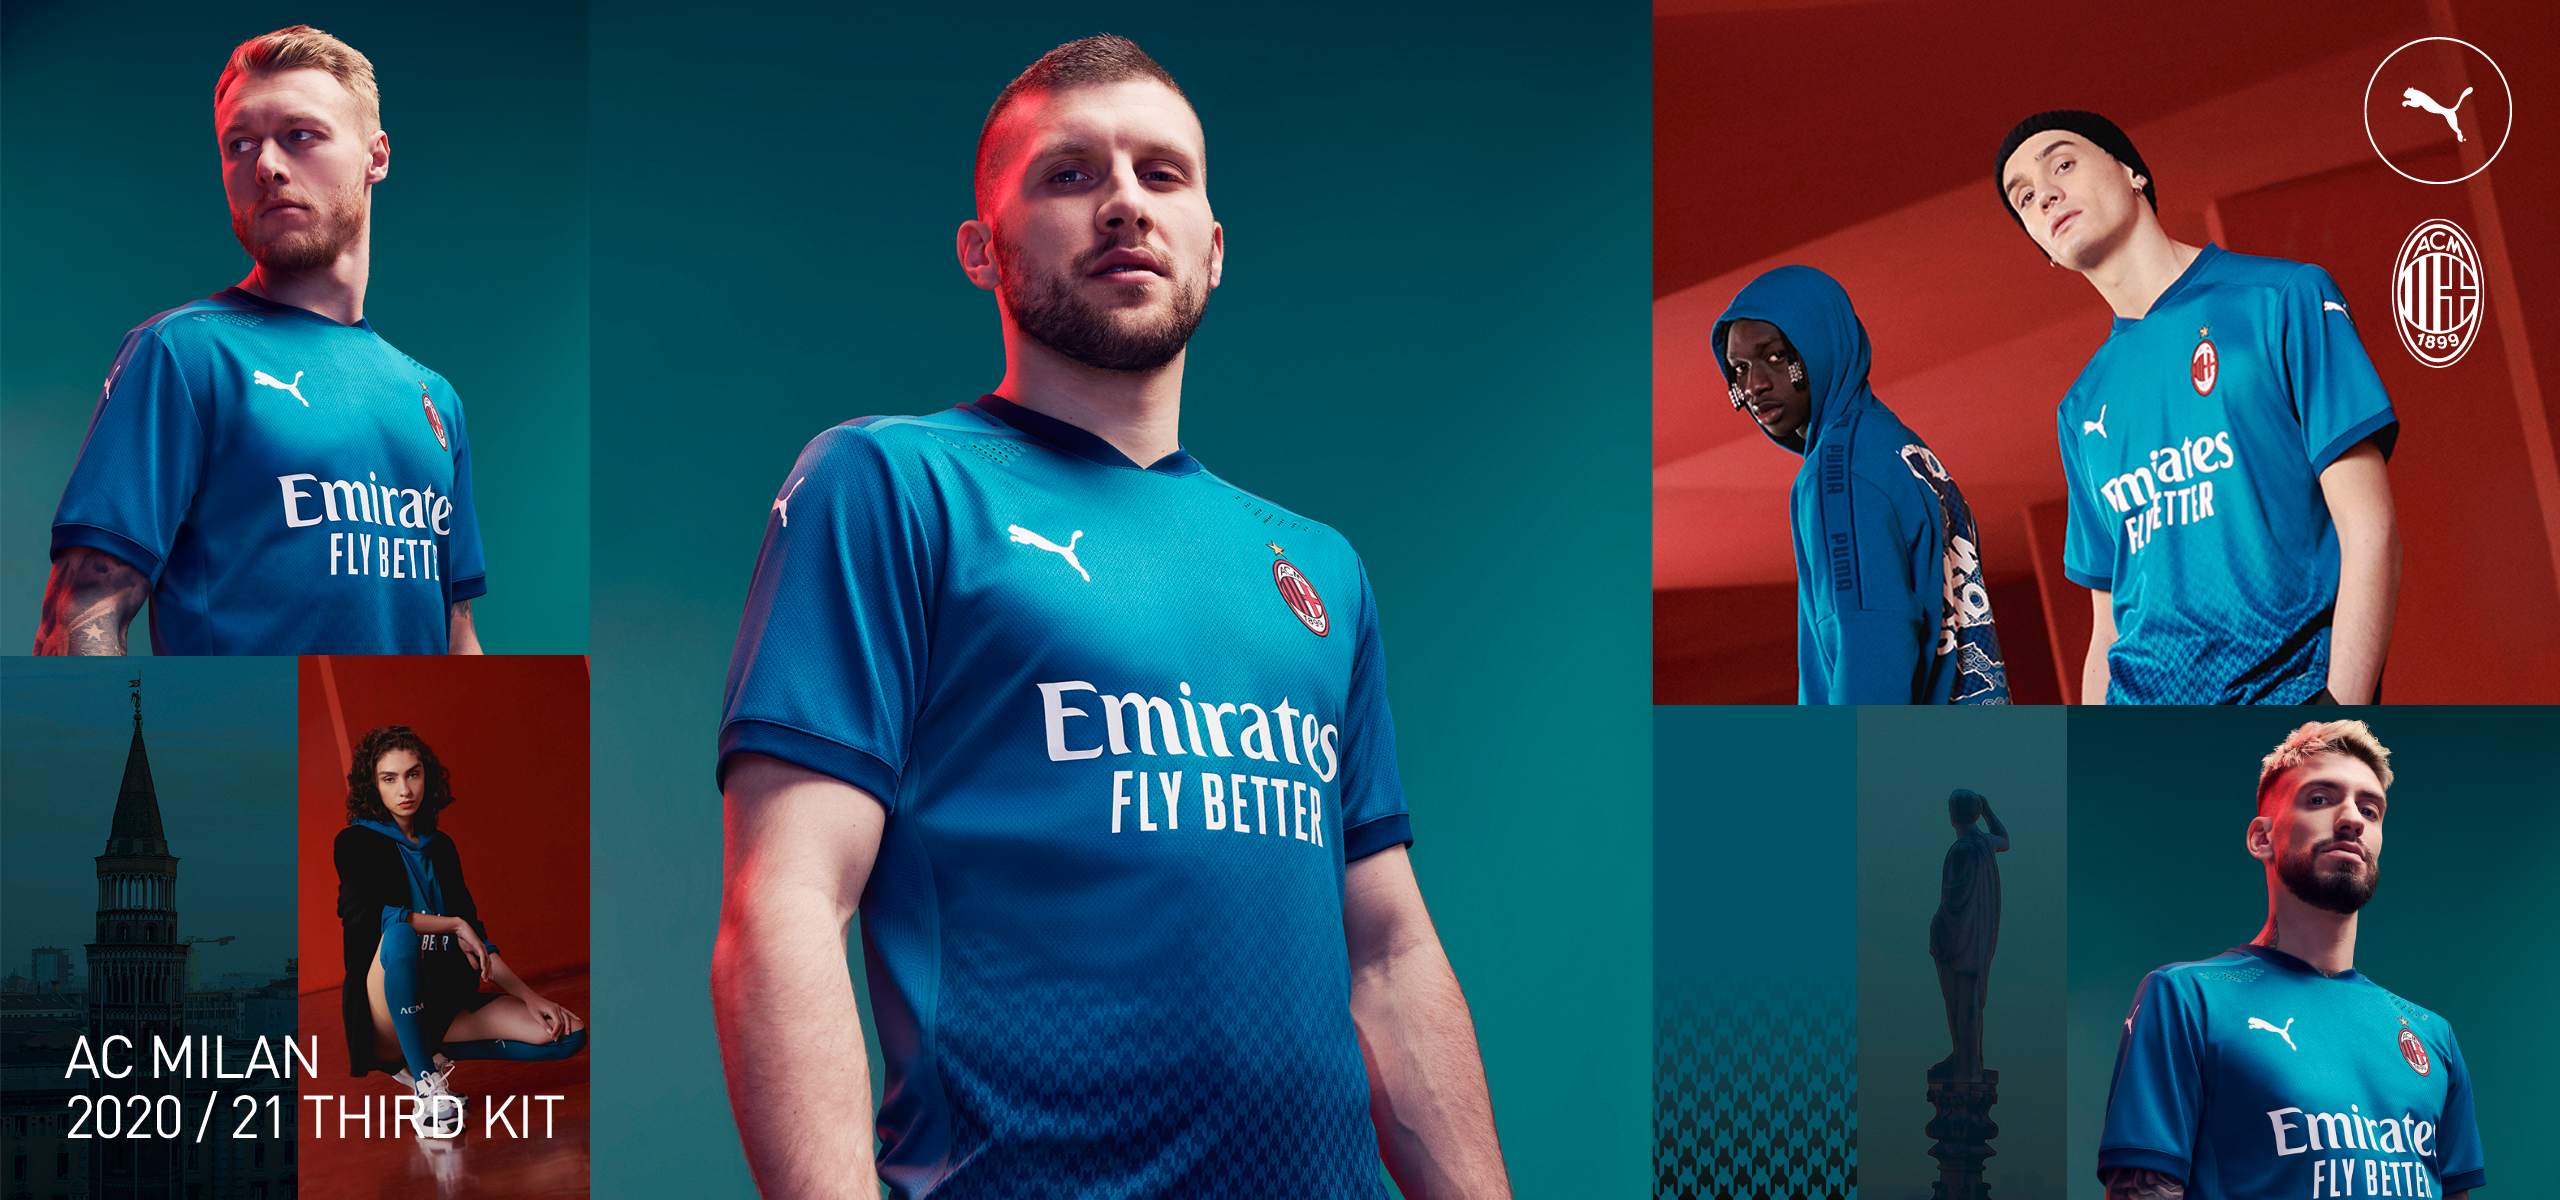 The new Milan 2020/2021 PUMA shirt